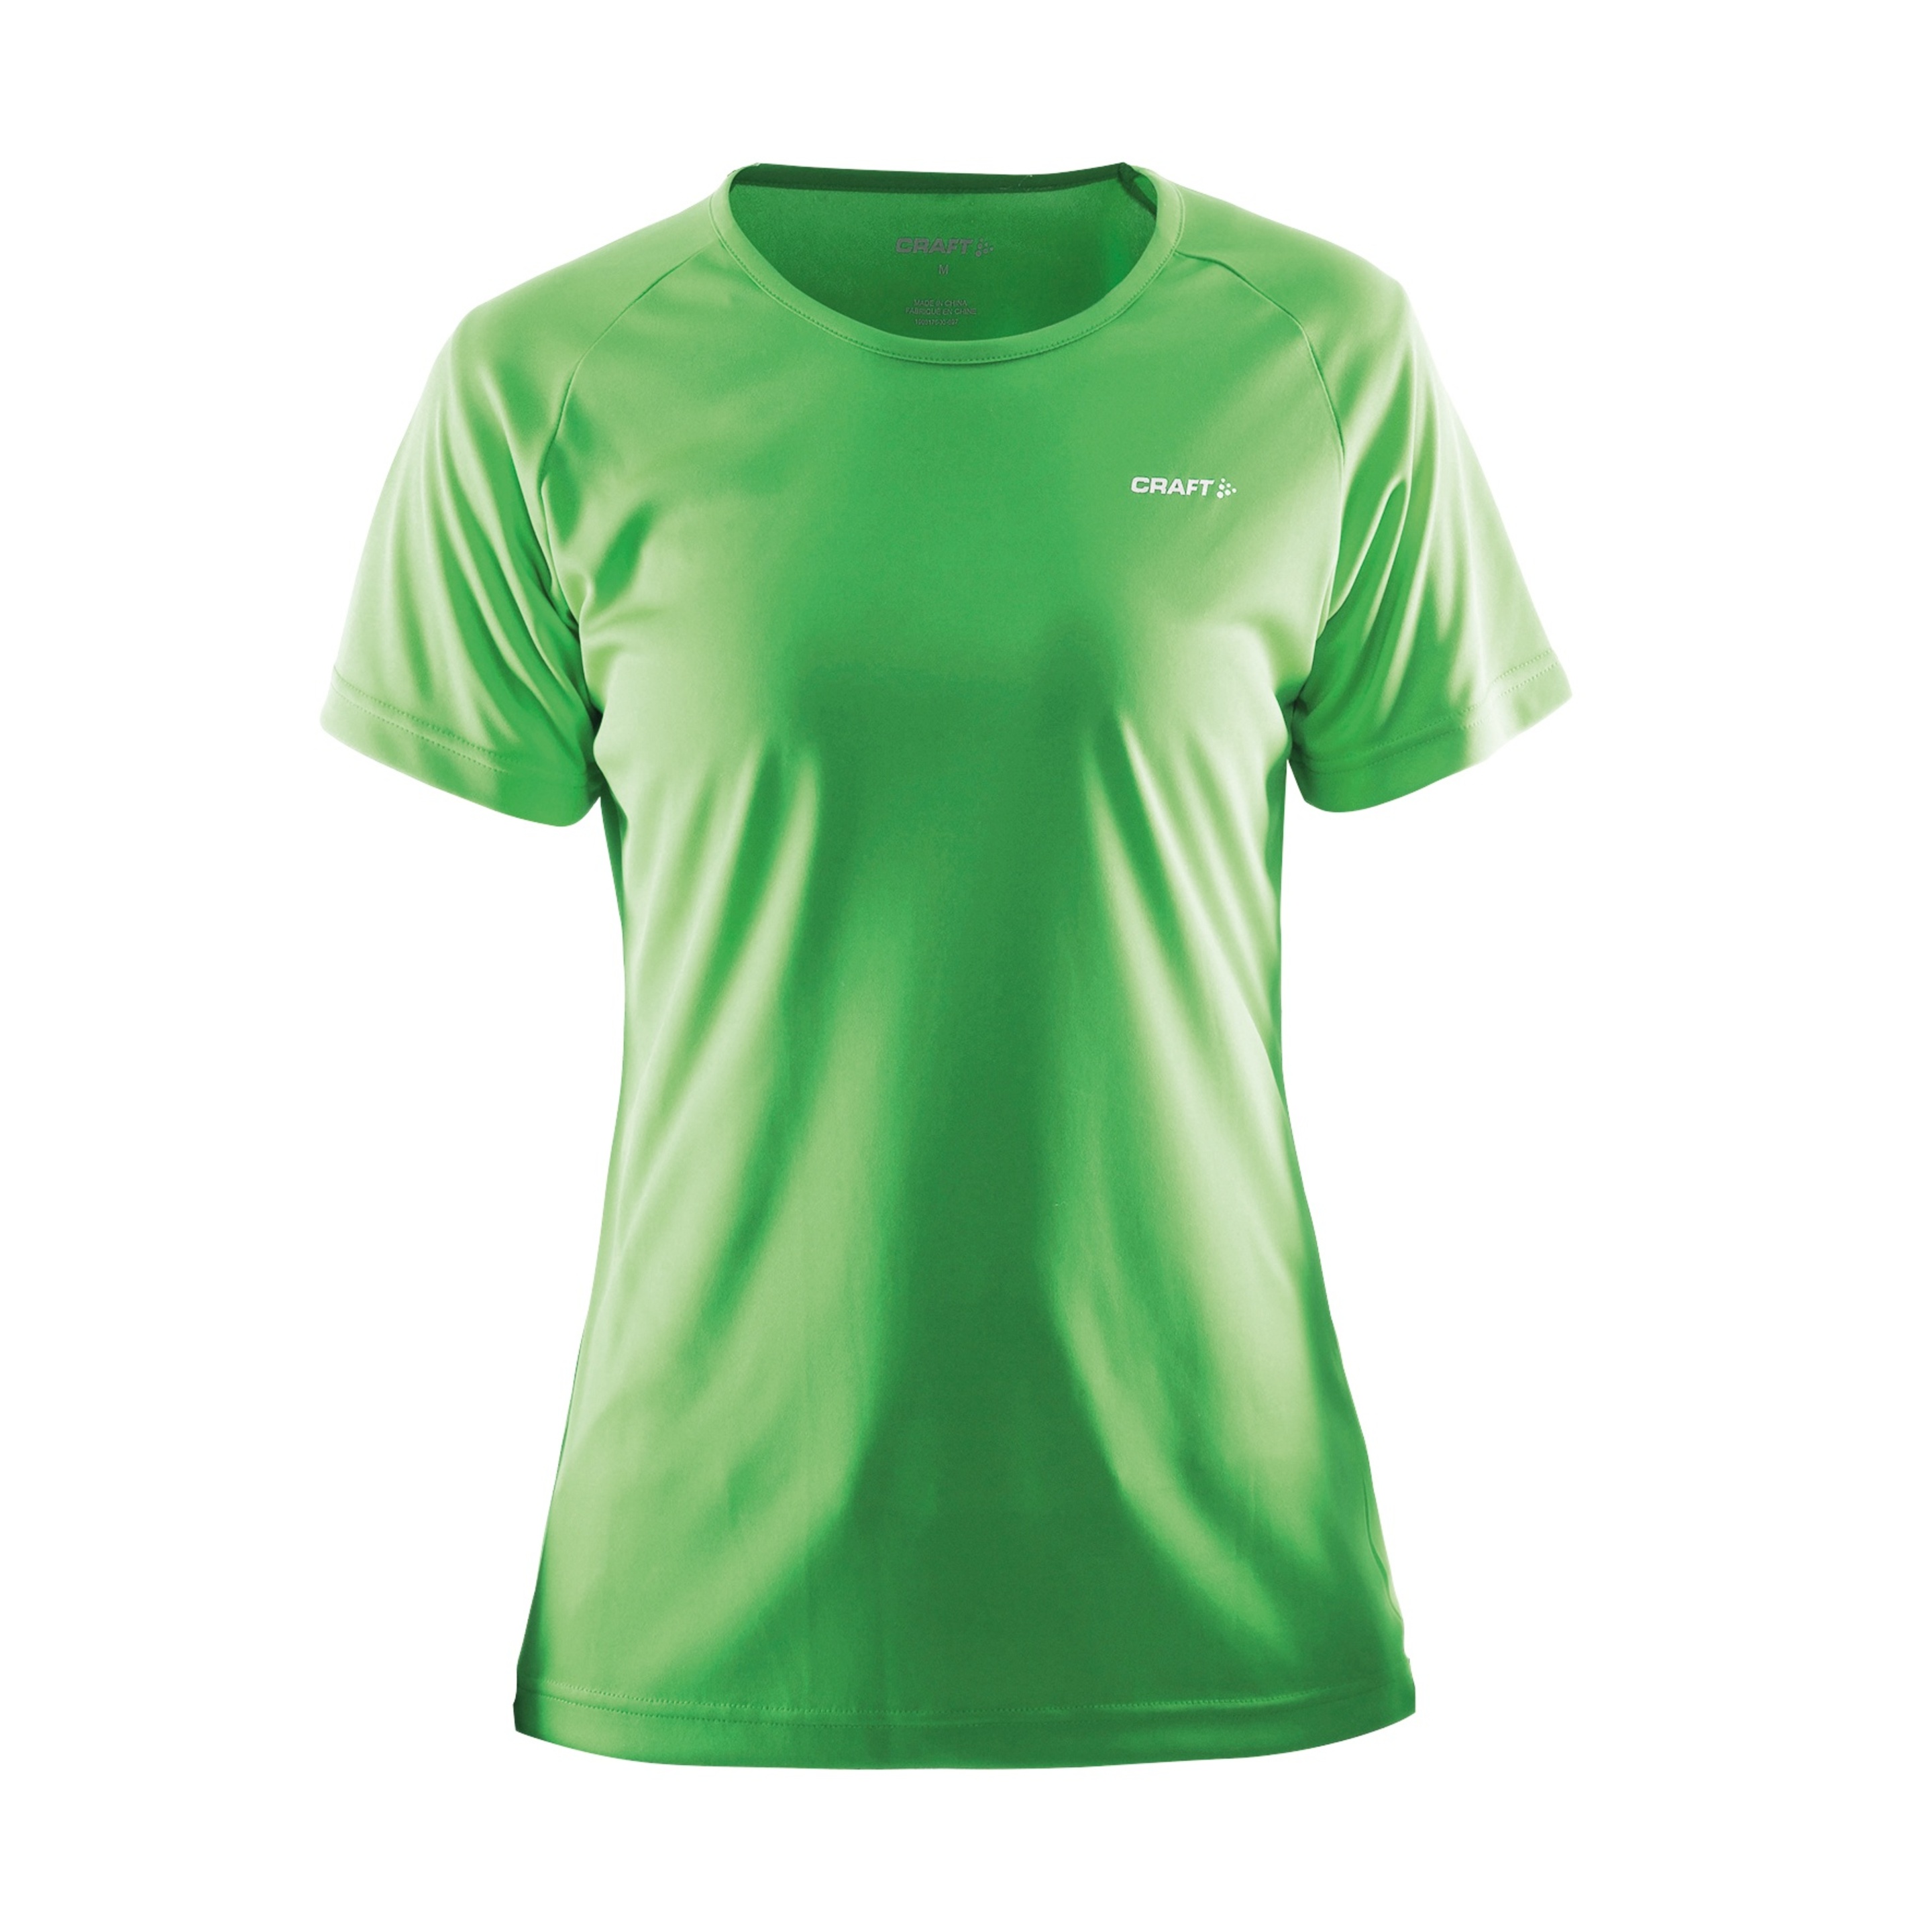 Craft - Camiseta De Manga Corta Deportiva Y Ligera Modelo Prime Para Mujer (Verde)